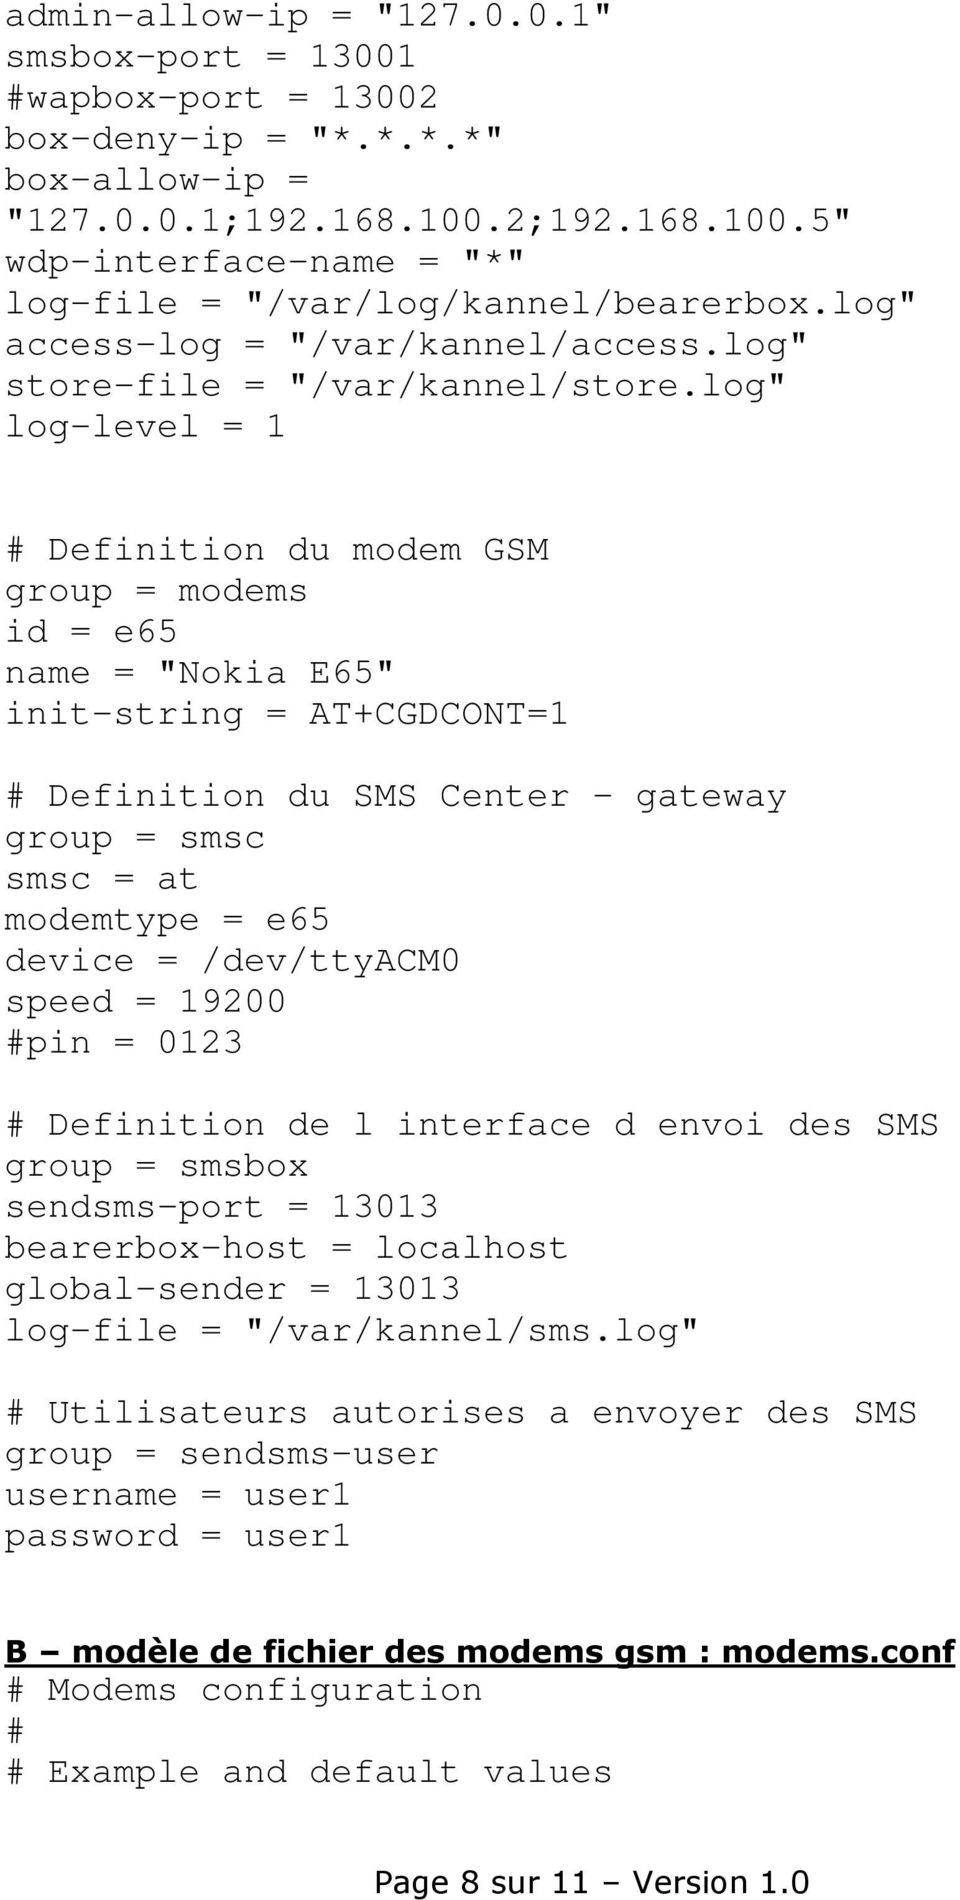 log" log-level = 1 # Definition du modem GSM id = e65 name = "Nokia E65" init-string = AT+CGDCONT=1 # Definition du SMS Center - gateway group = smsc smsc = at modemtype = e65 device = /dev/ttyacm0